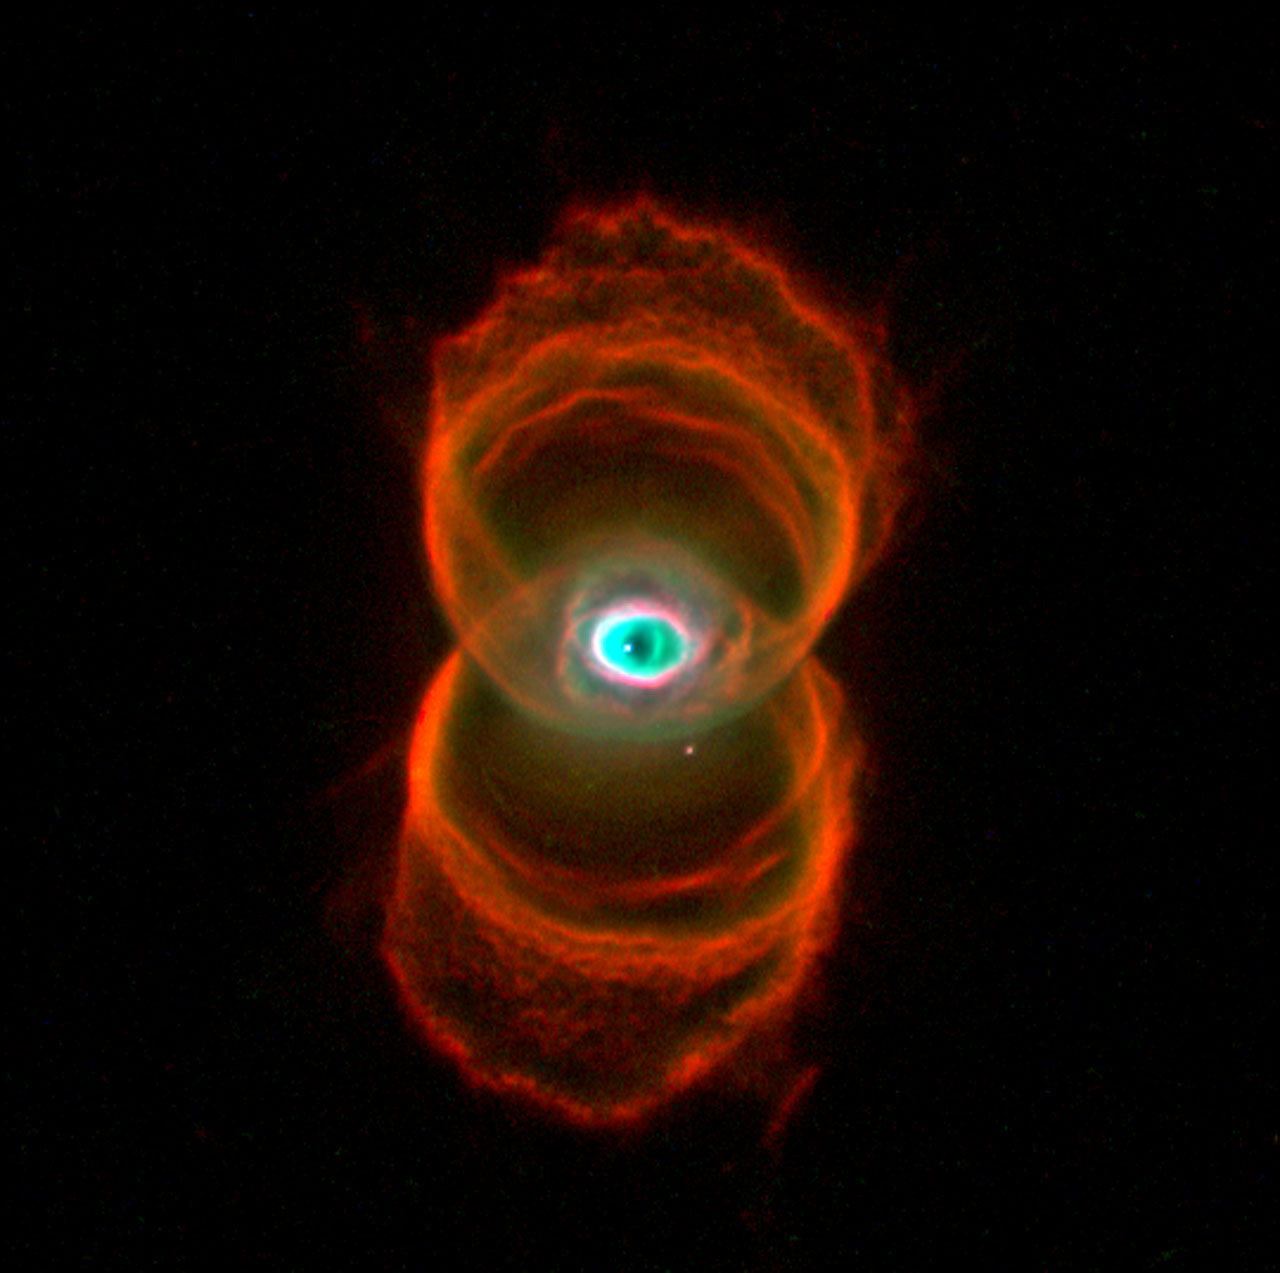 MyCn 18 (Engraved Hourglass Nebula)